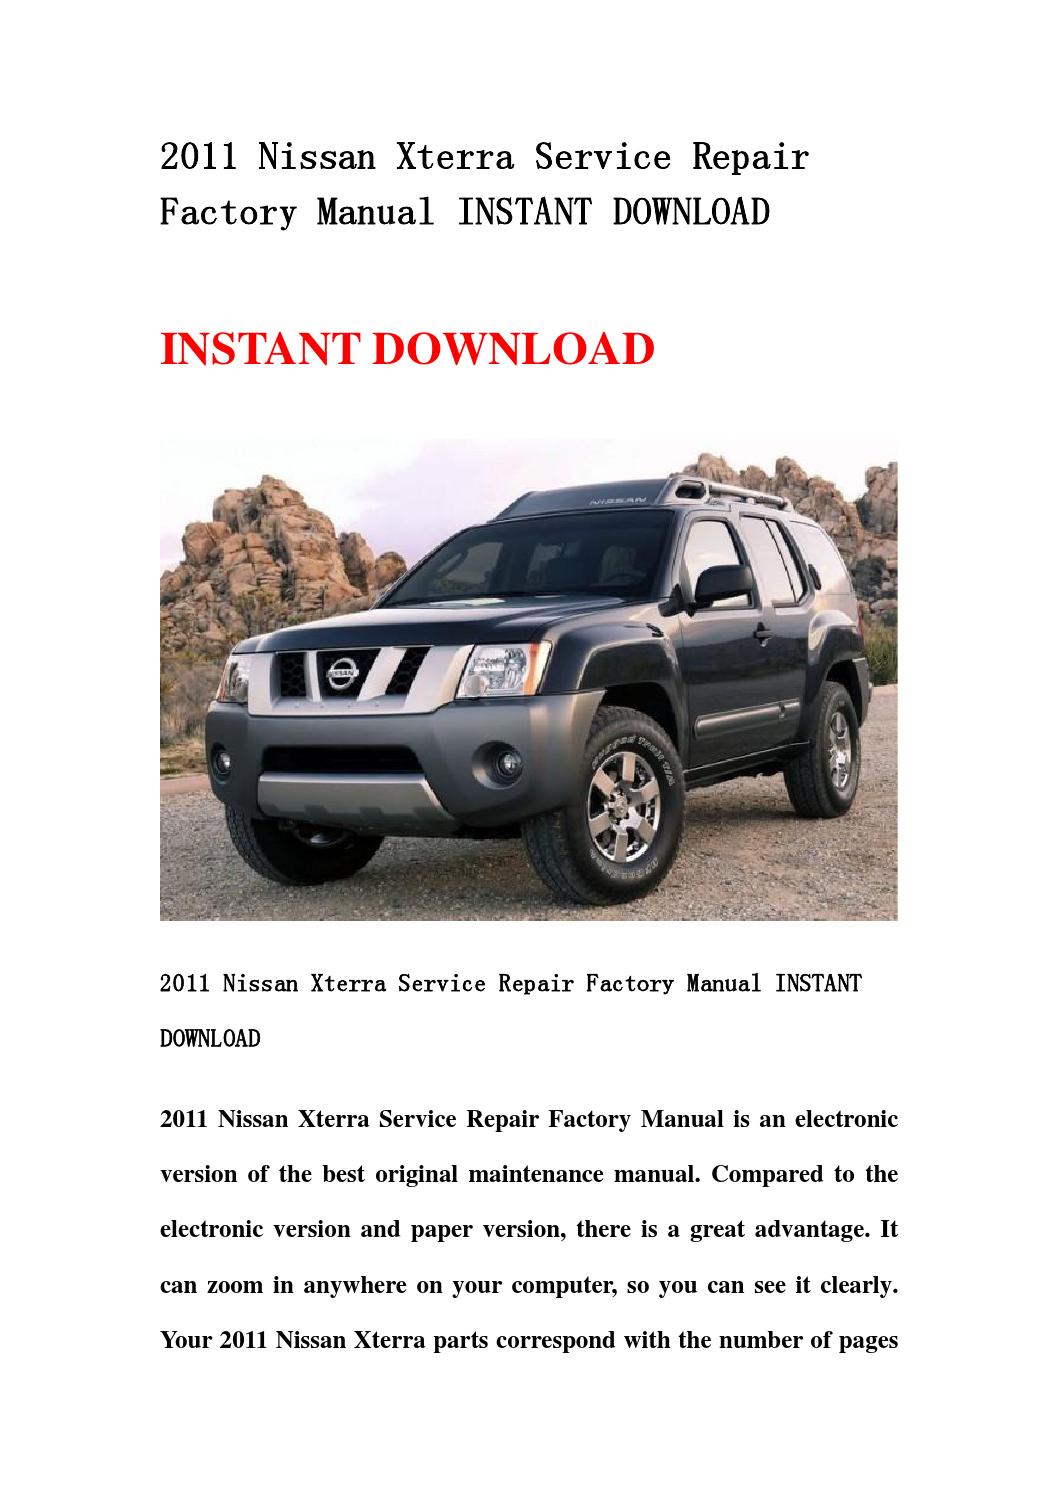 2007 nissan frontier service repair manual free download